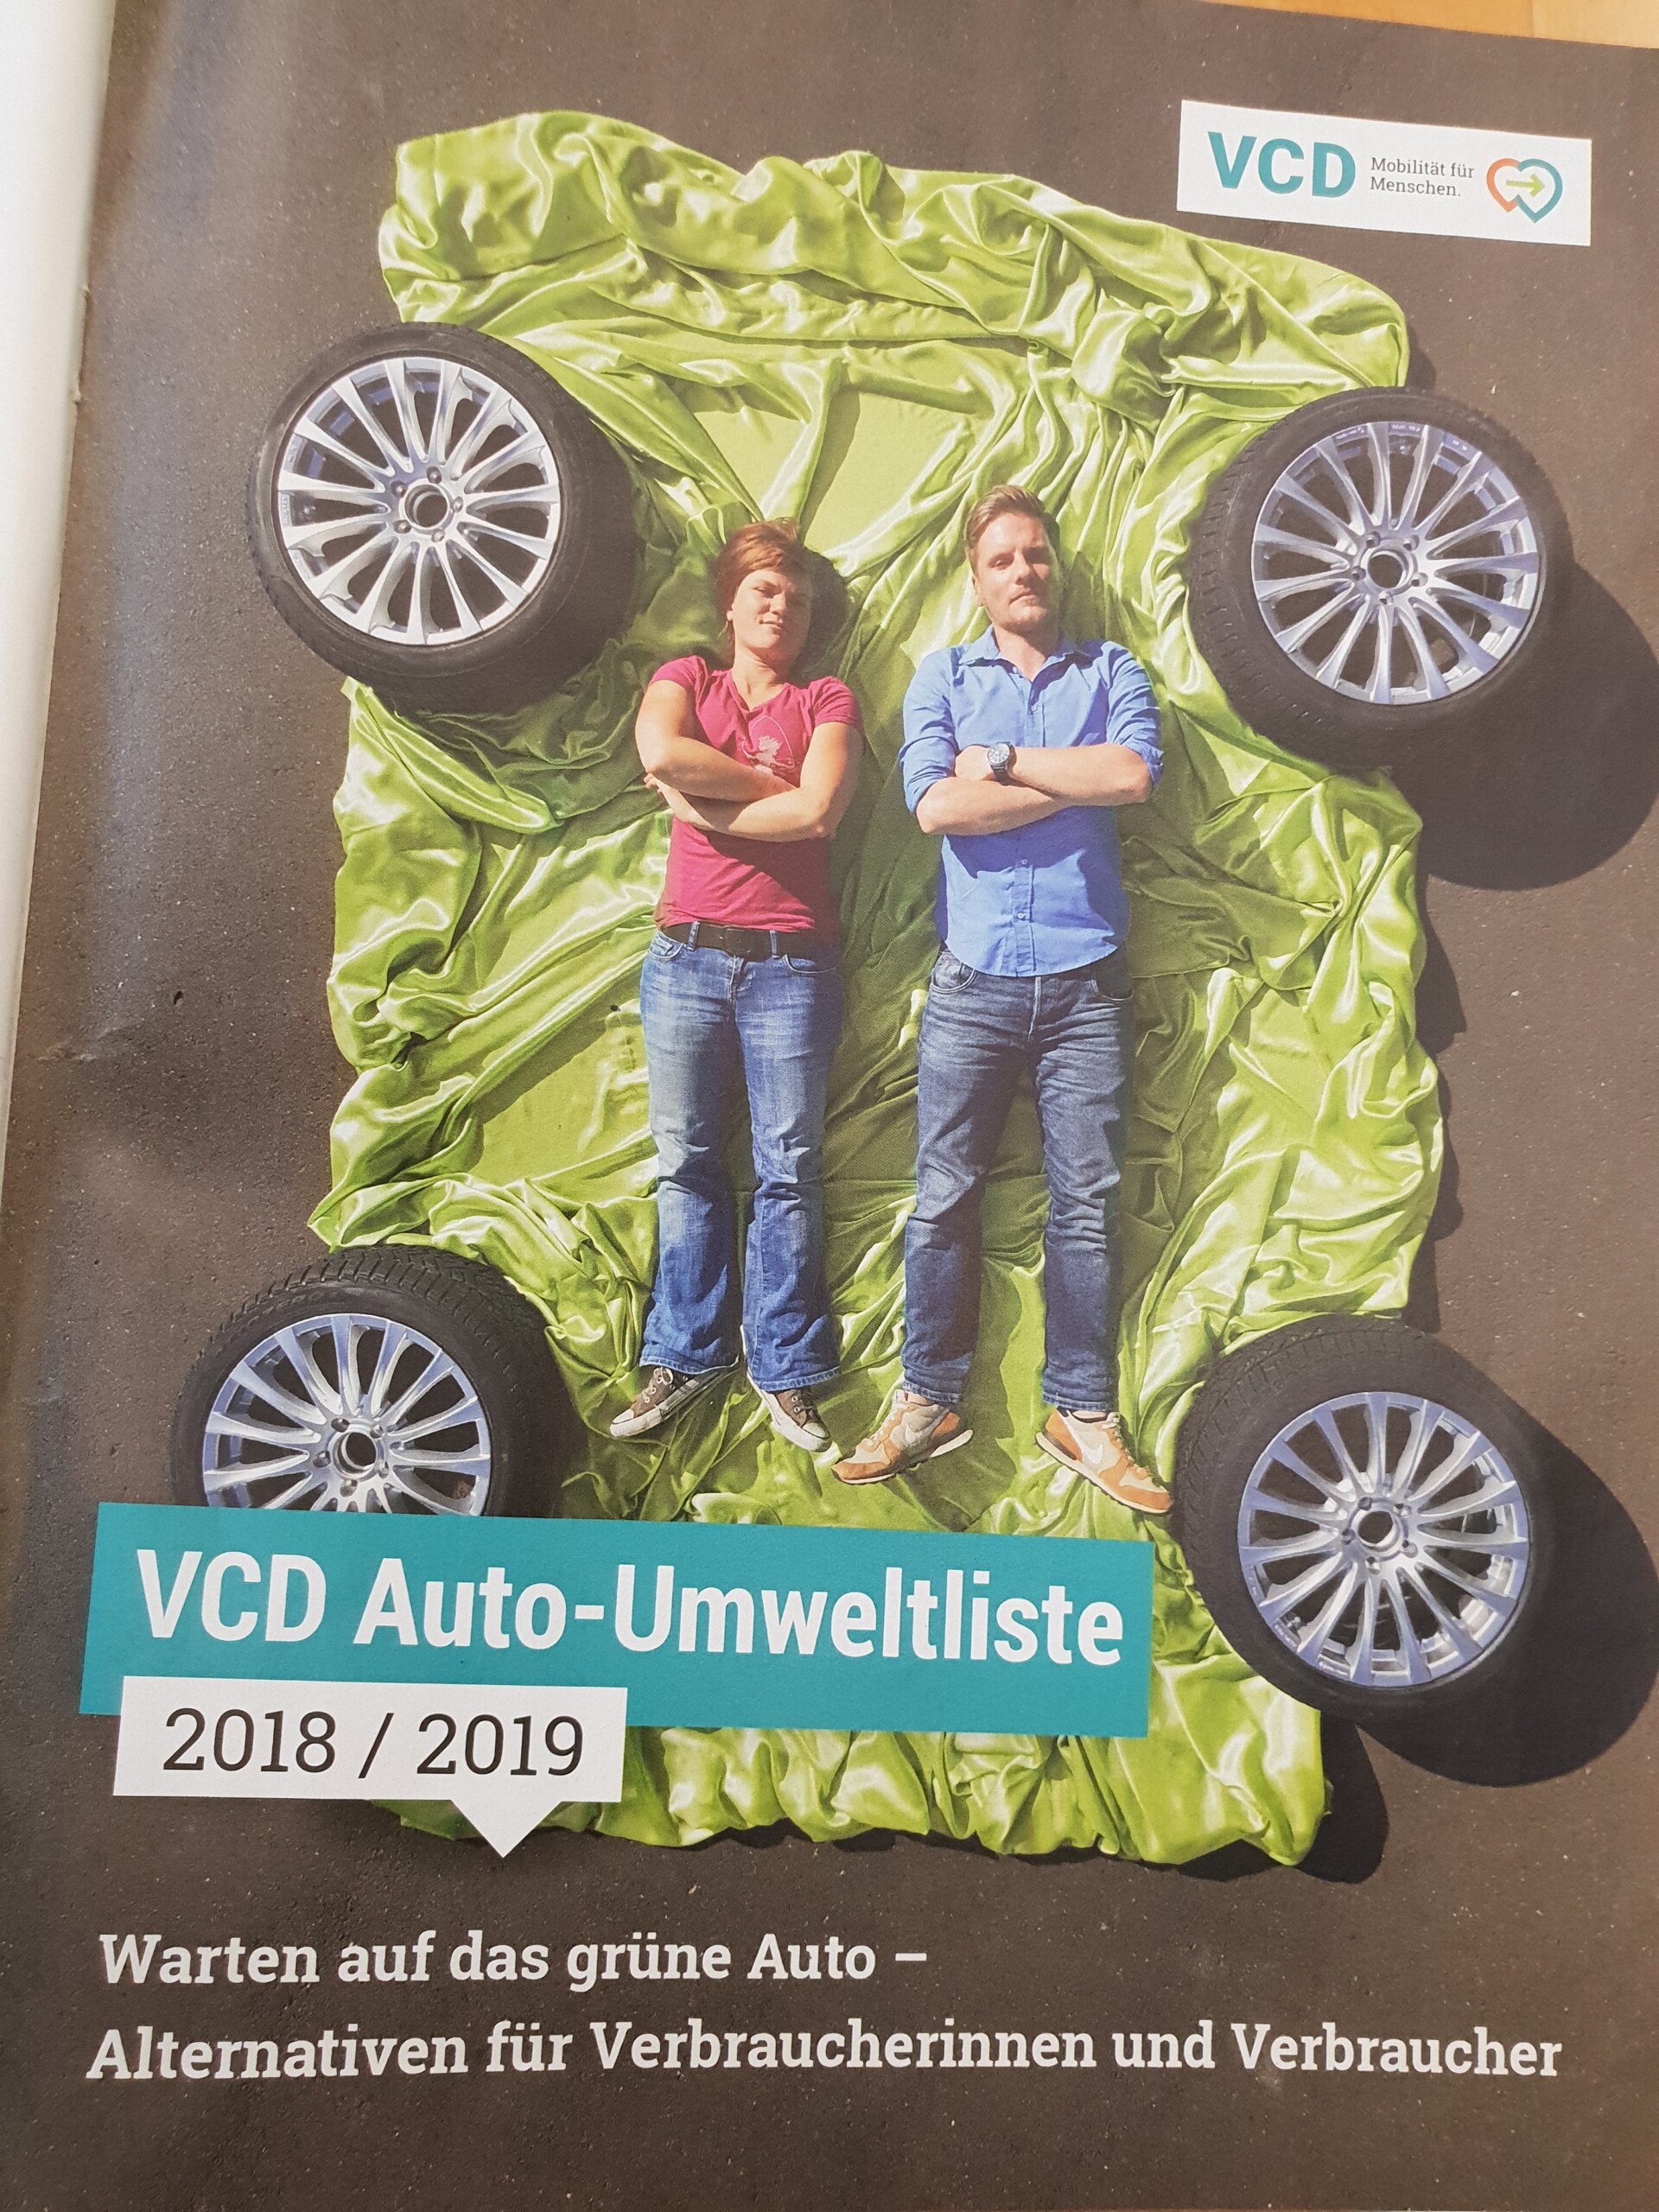 VCD legt neue Auto-Umweltliste vor